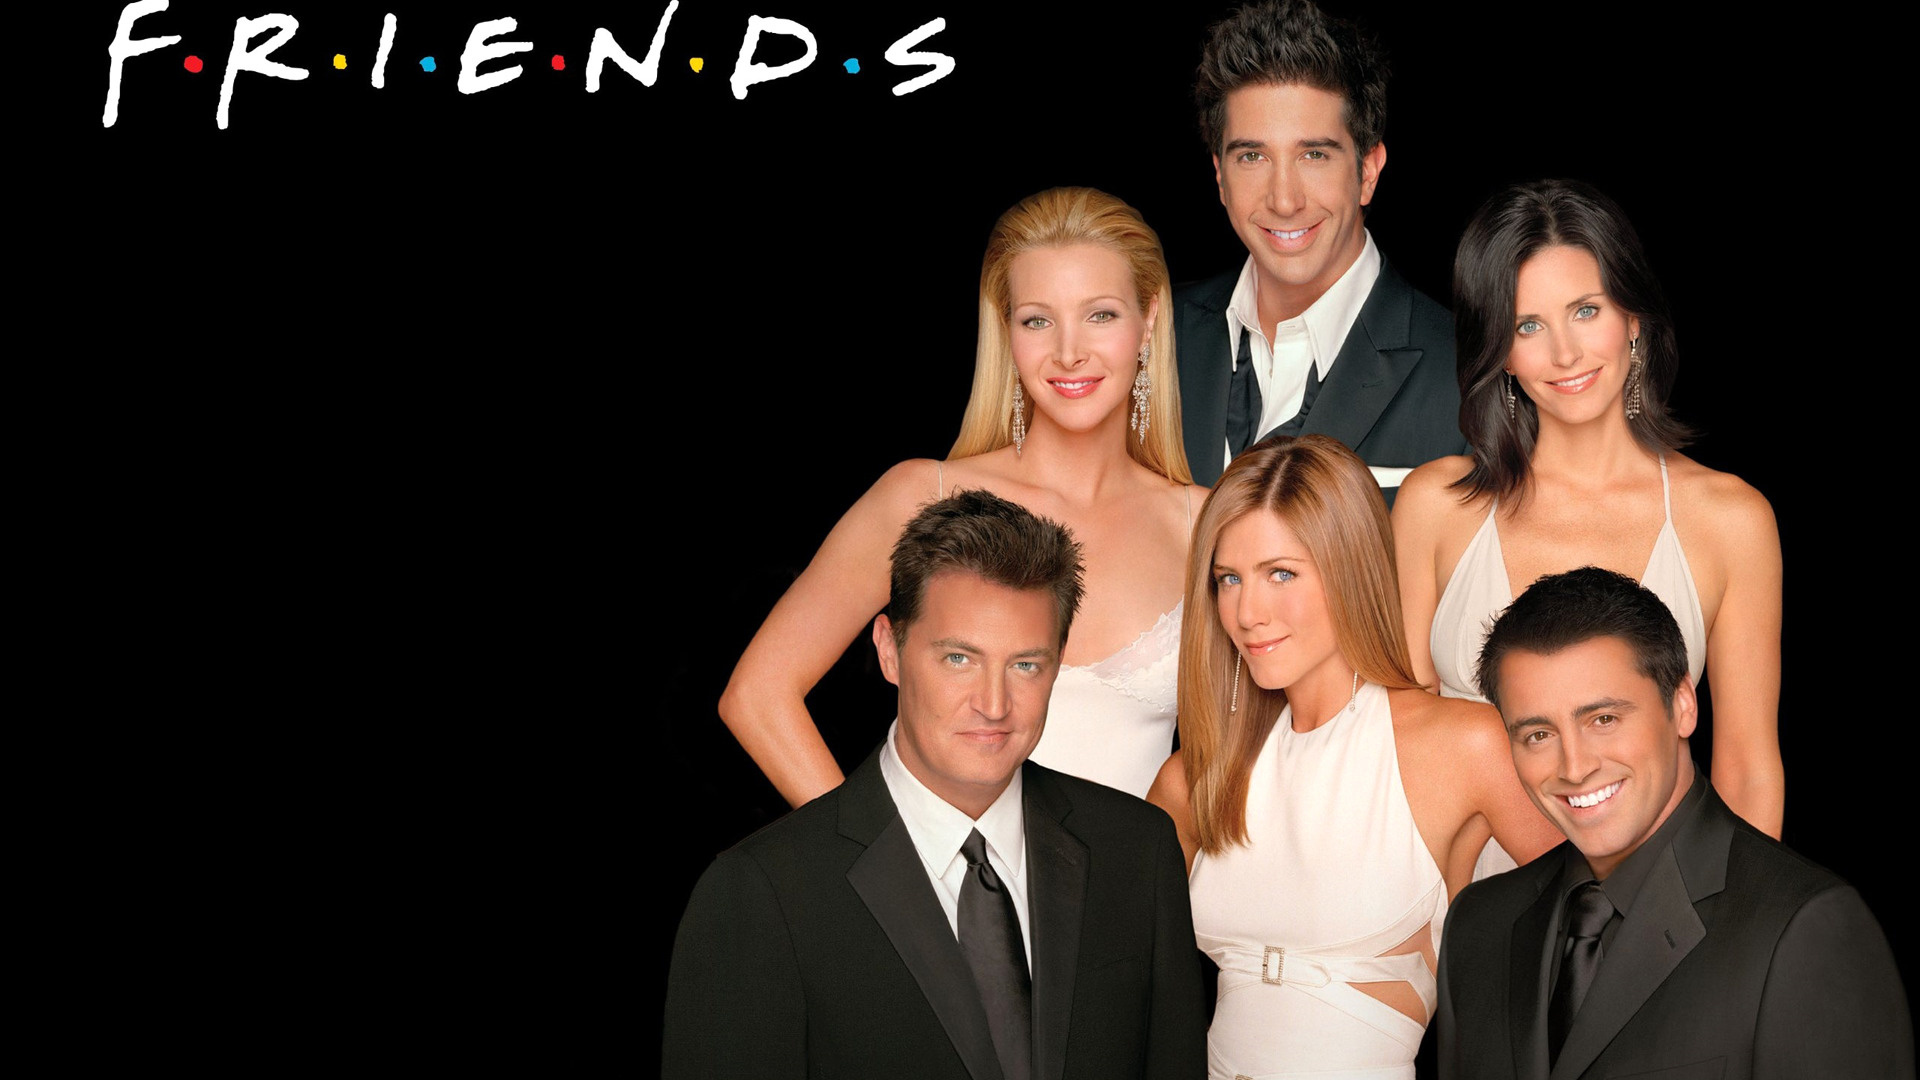 Friends poster download, Jennifer Aniston, Matthew Perry, comedy sitcom, 1920x1080 Full HD Desktop